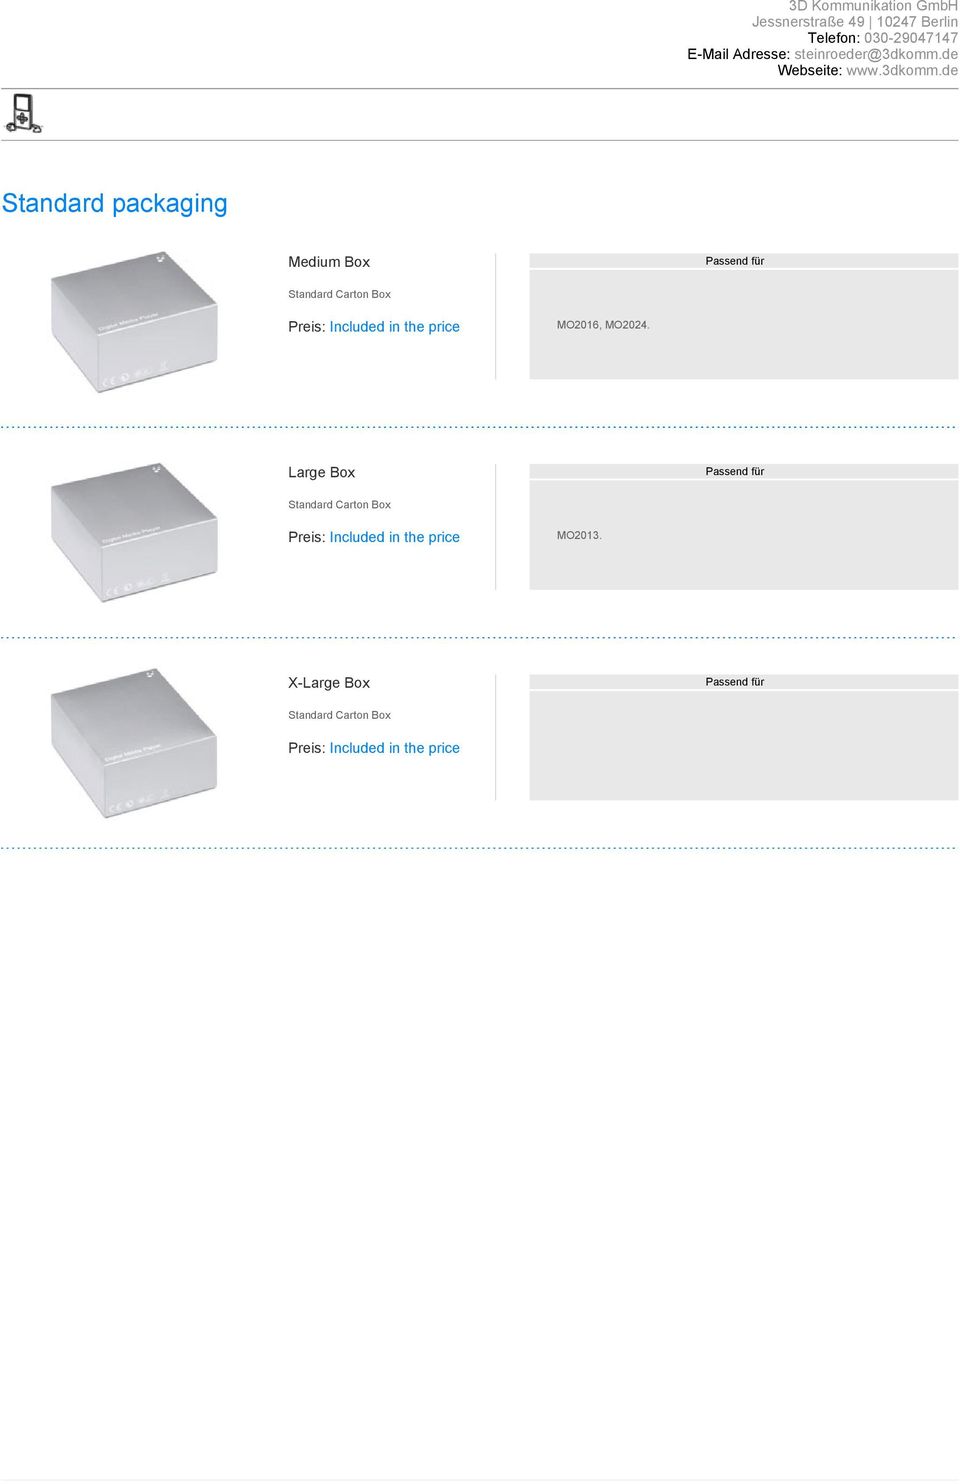 Large Box Passend für Standard Carton Box Preis: Included in the